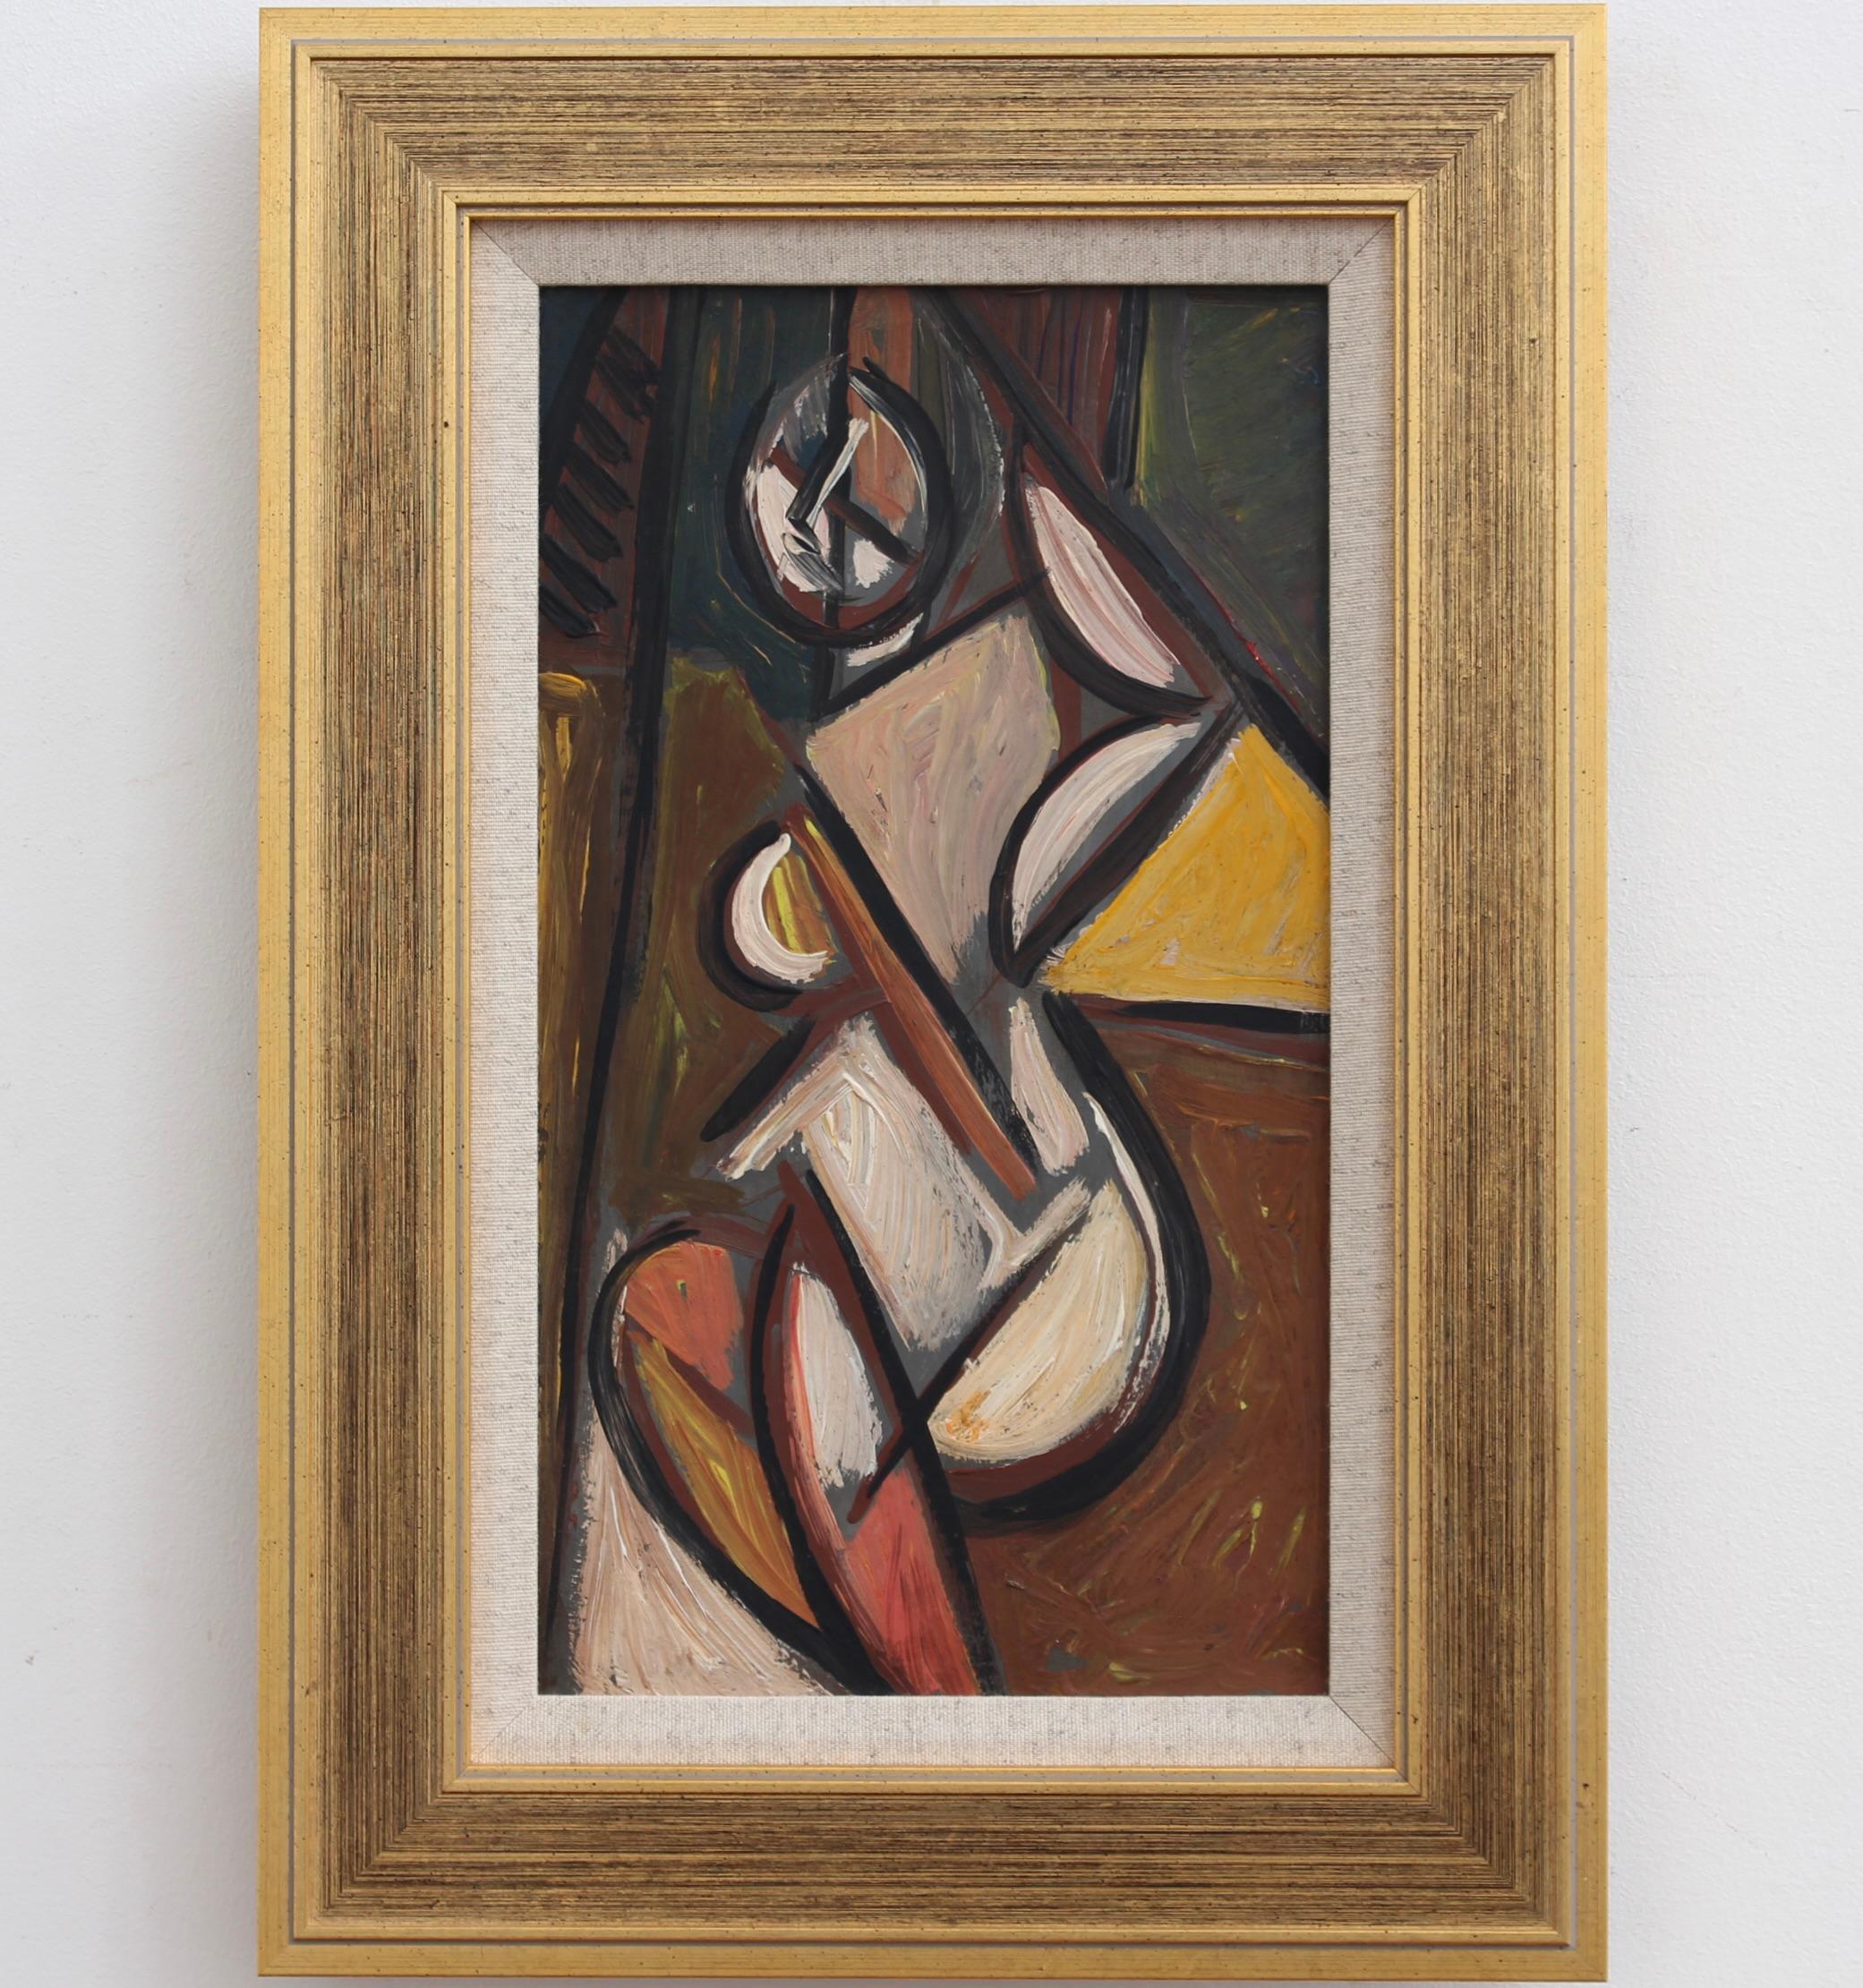 Unknown Portrait Painting - 'Radiant Muse: Inspired Cubist Portrait', German School (circa 1970s)